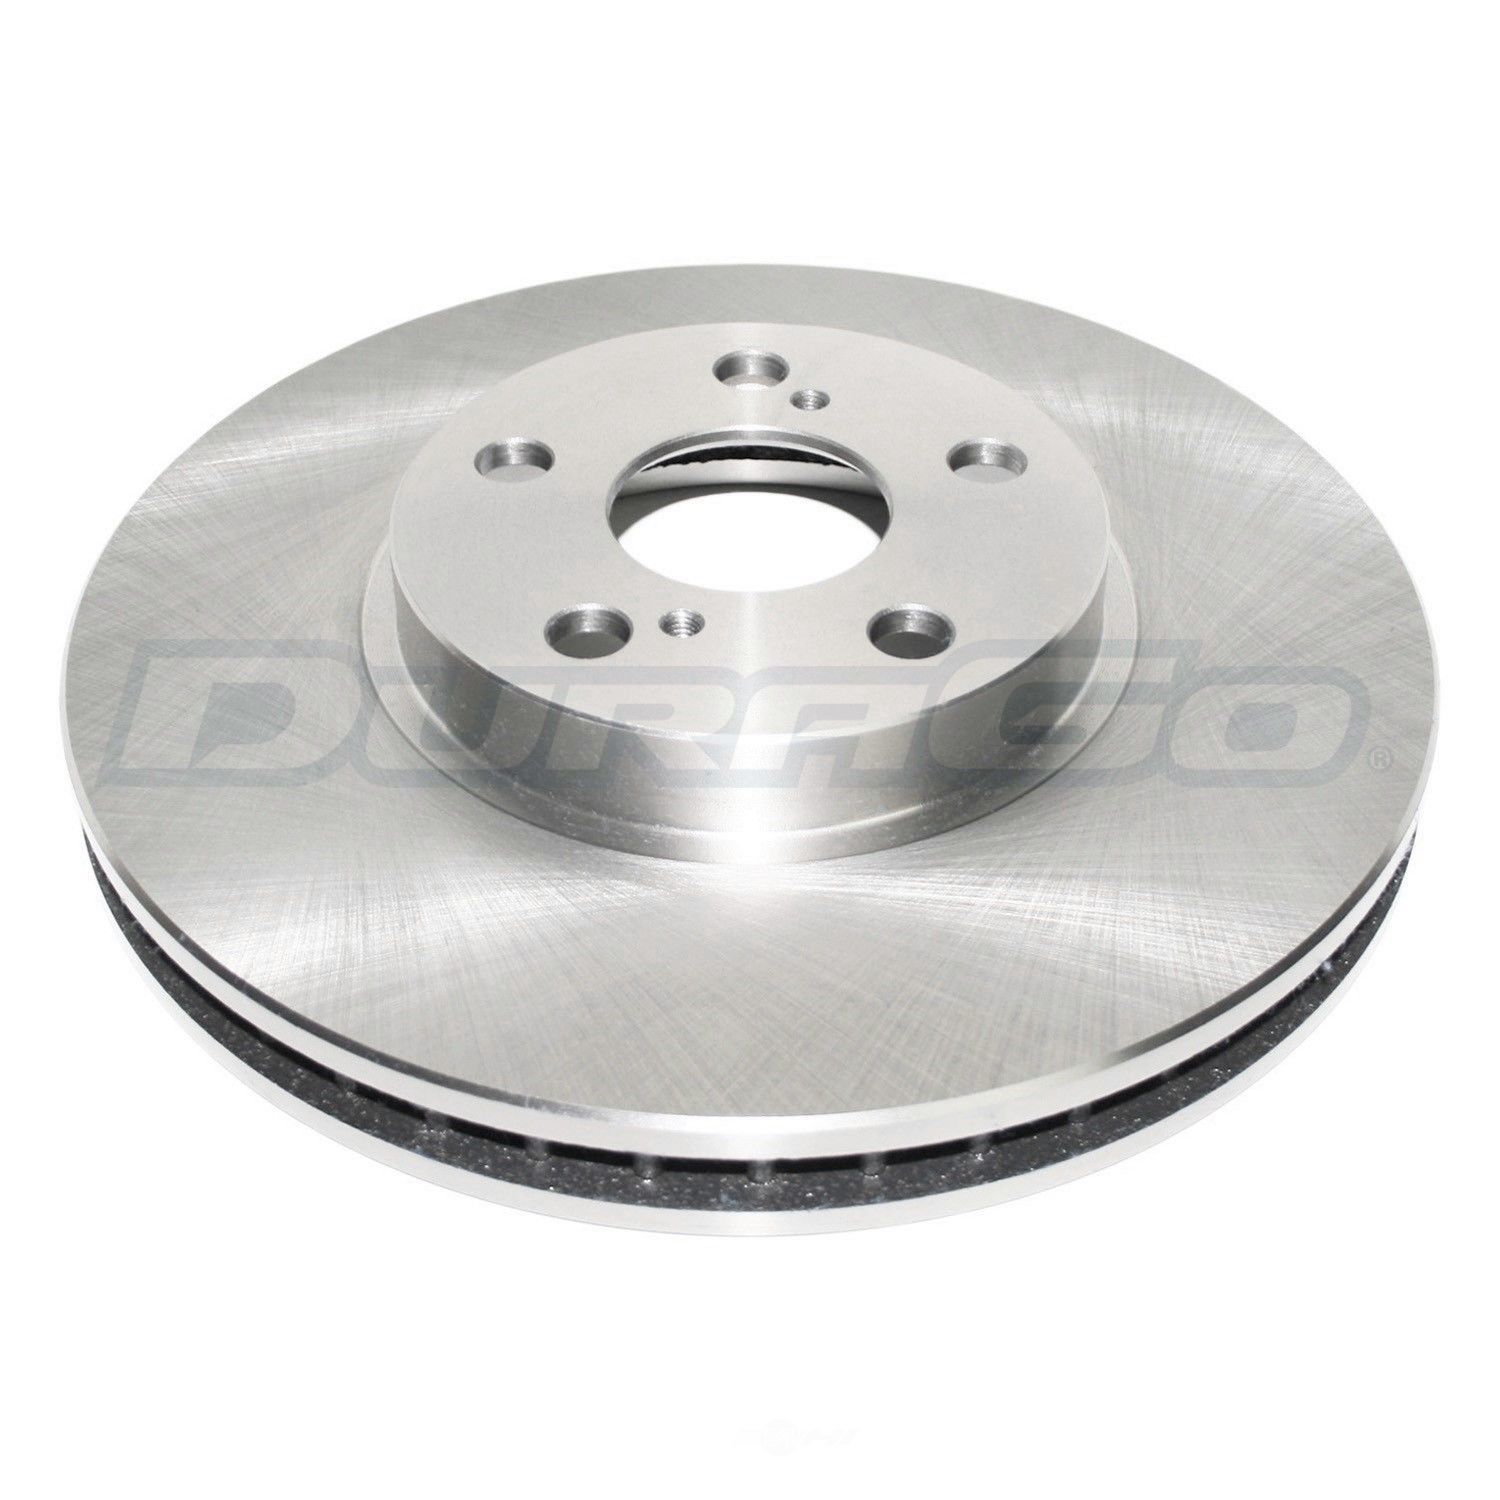 DURAGO - Disc Brake Rotor (Front) - D48 BR31189